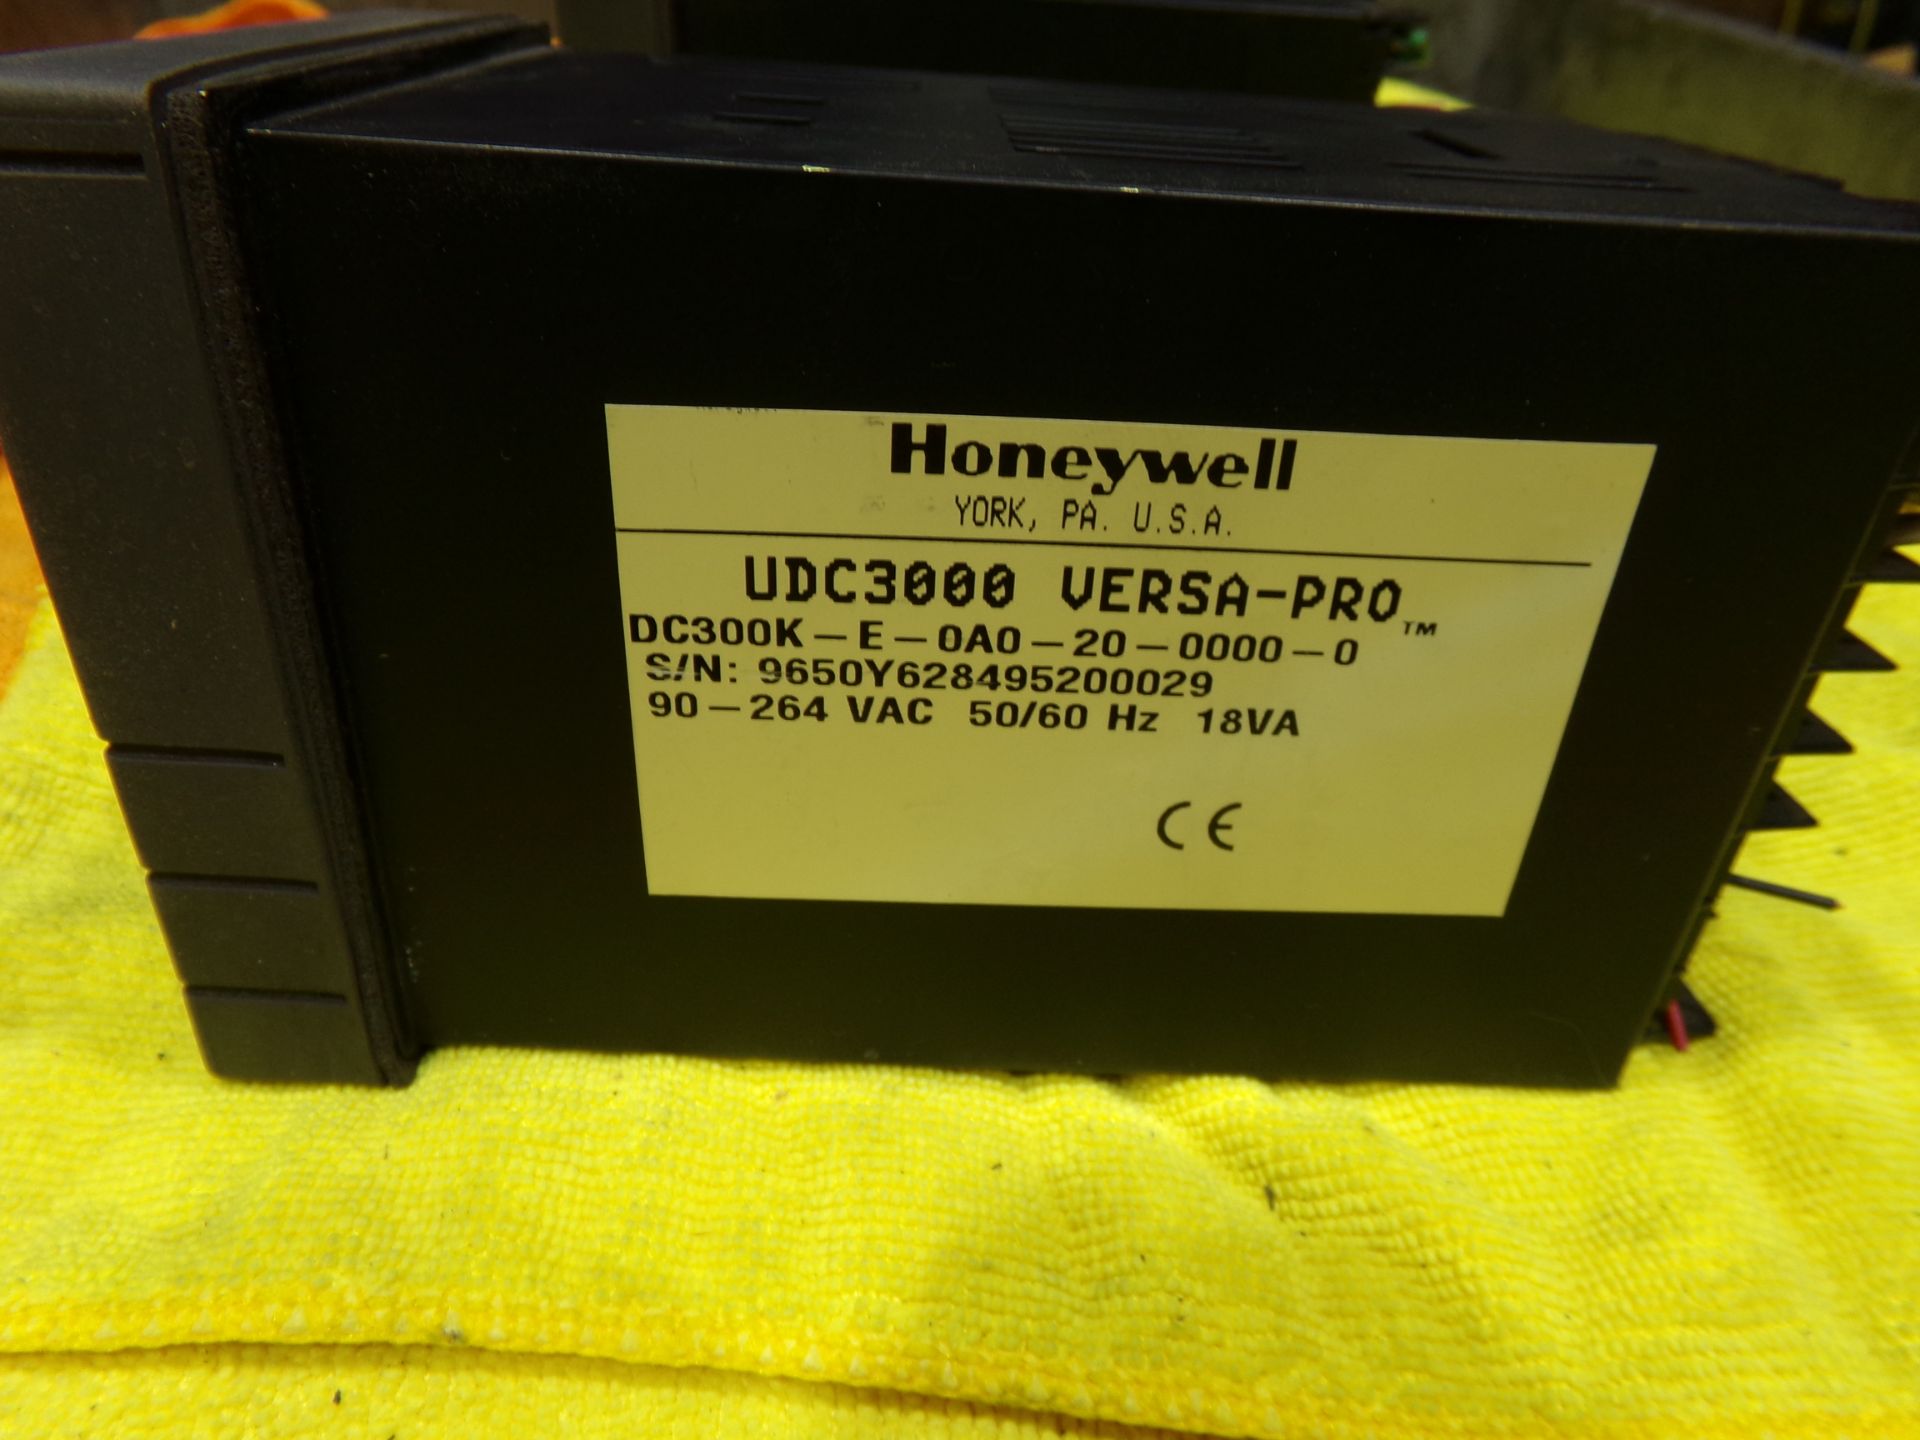 HONEYWELL DIGITAL CONTROLLER UDC3000 VERSA-PRO C300K-E-0A0-20-0000-0 90-264 VAC 50/60HZ 18VA LOT - Image 6 of 9